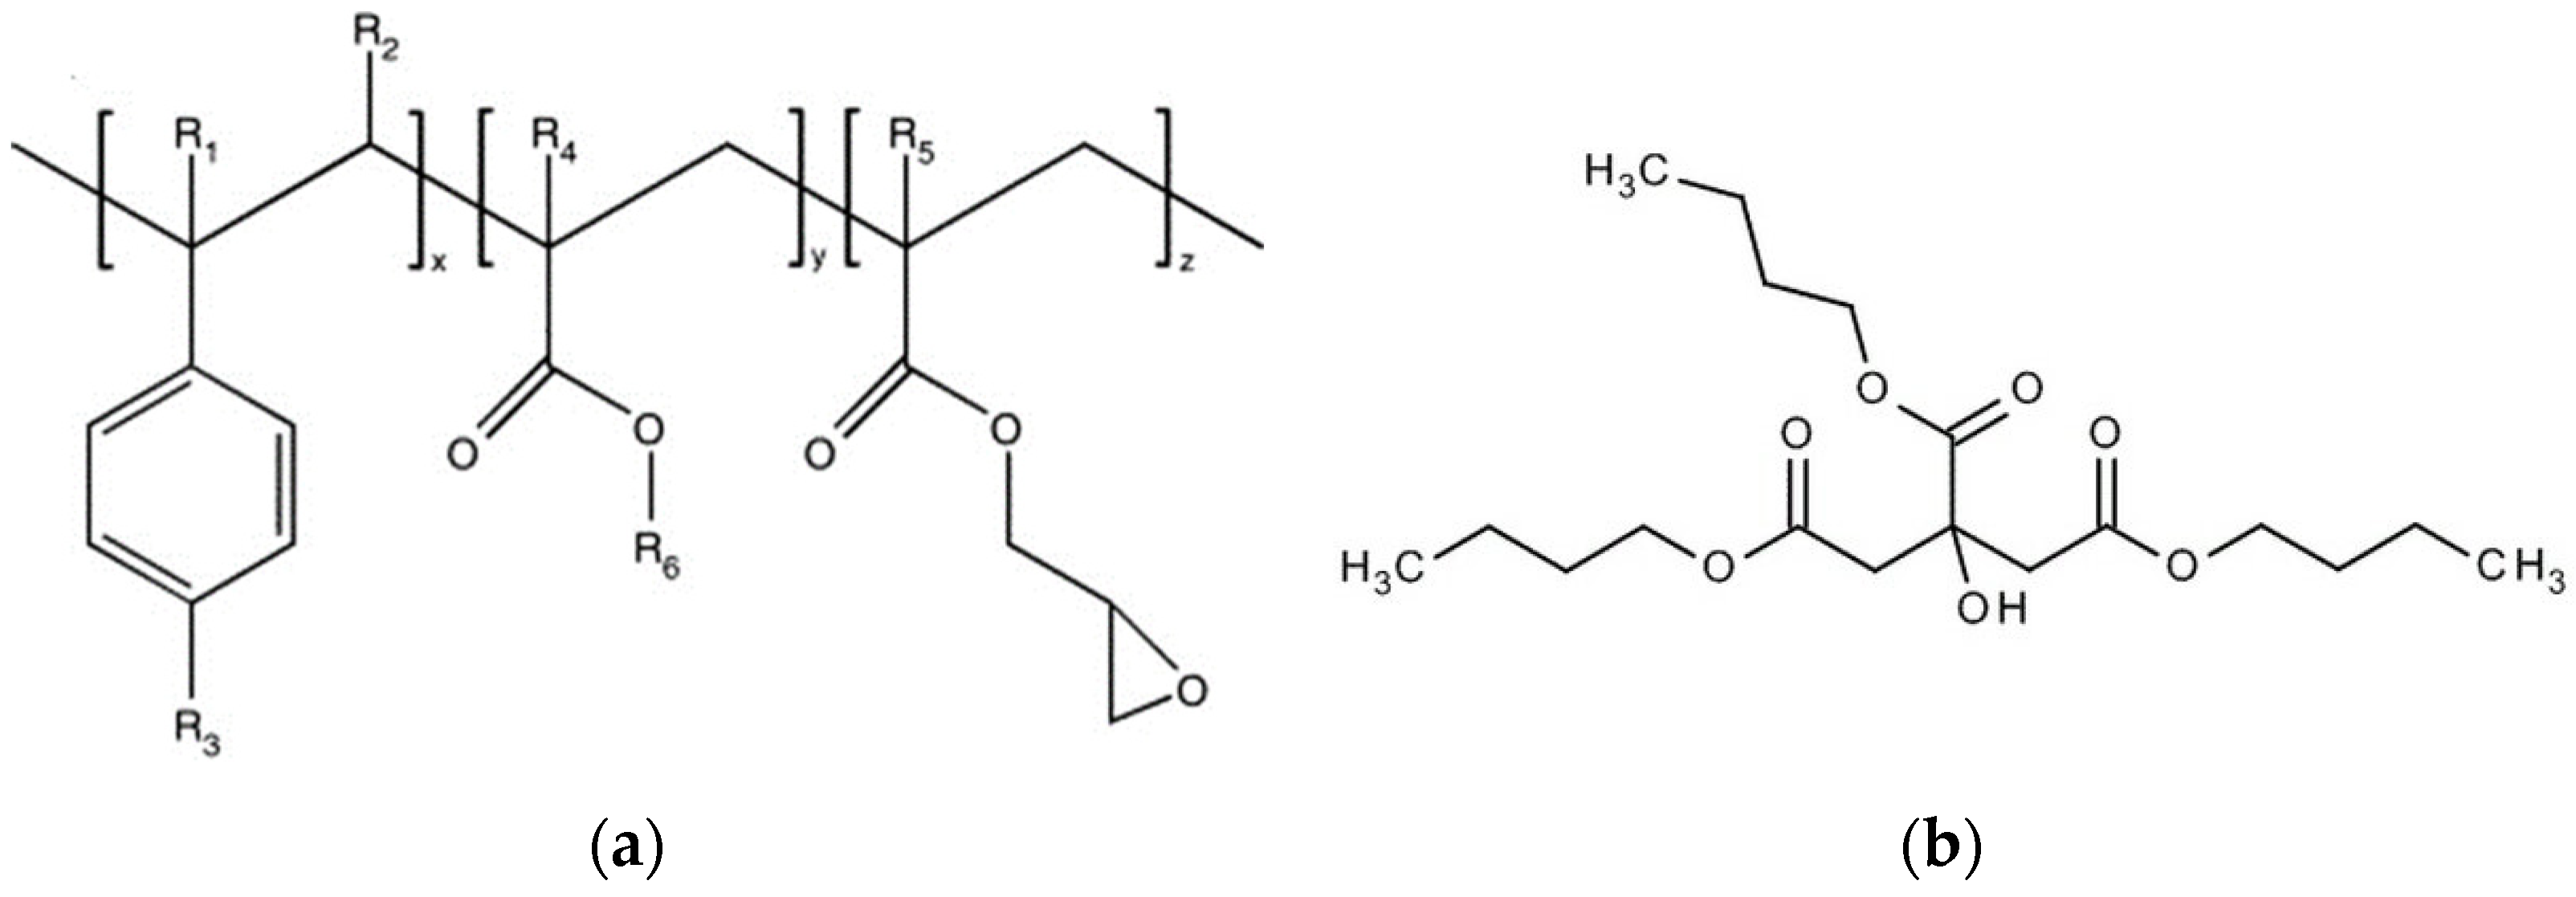 EDTA - (Ethylenediaminetetraacetic Acid) - Curriculum Press